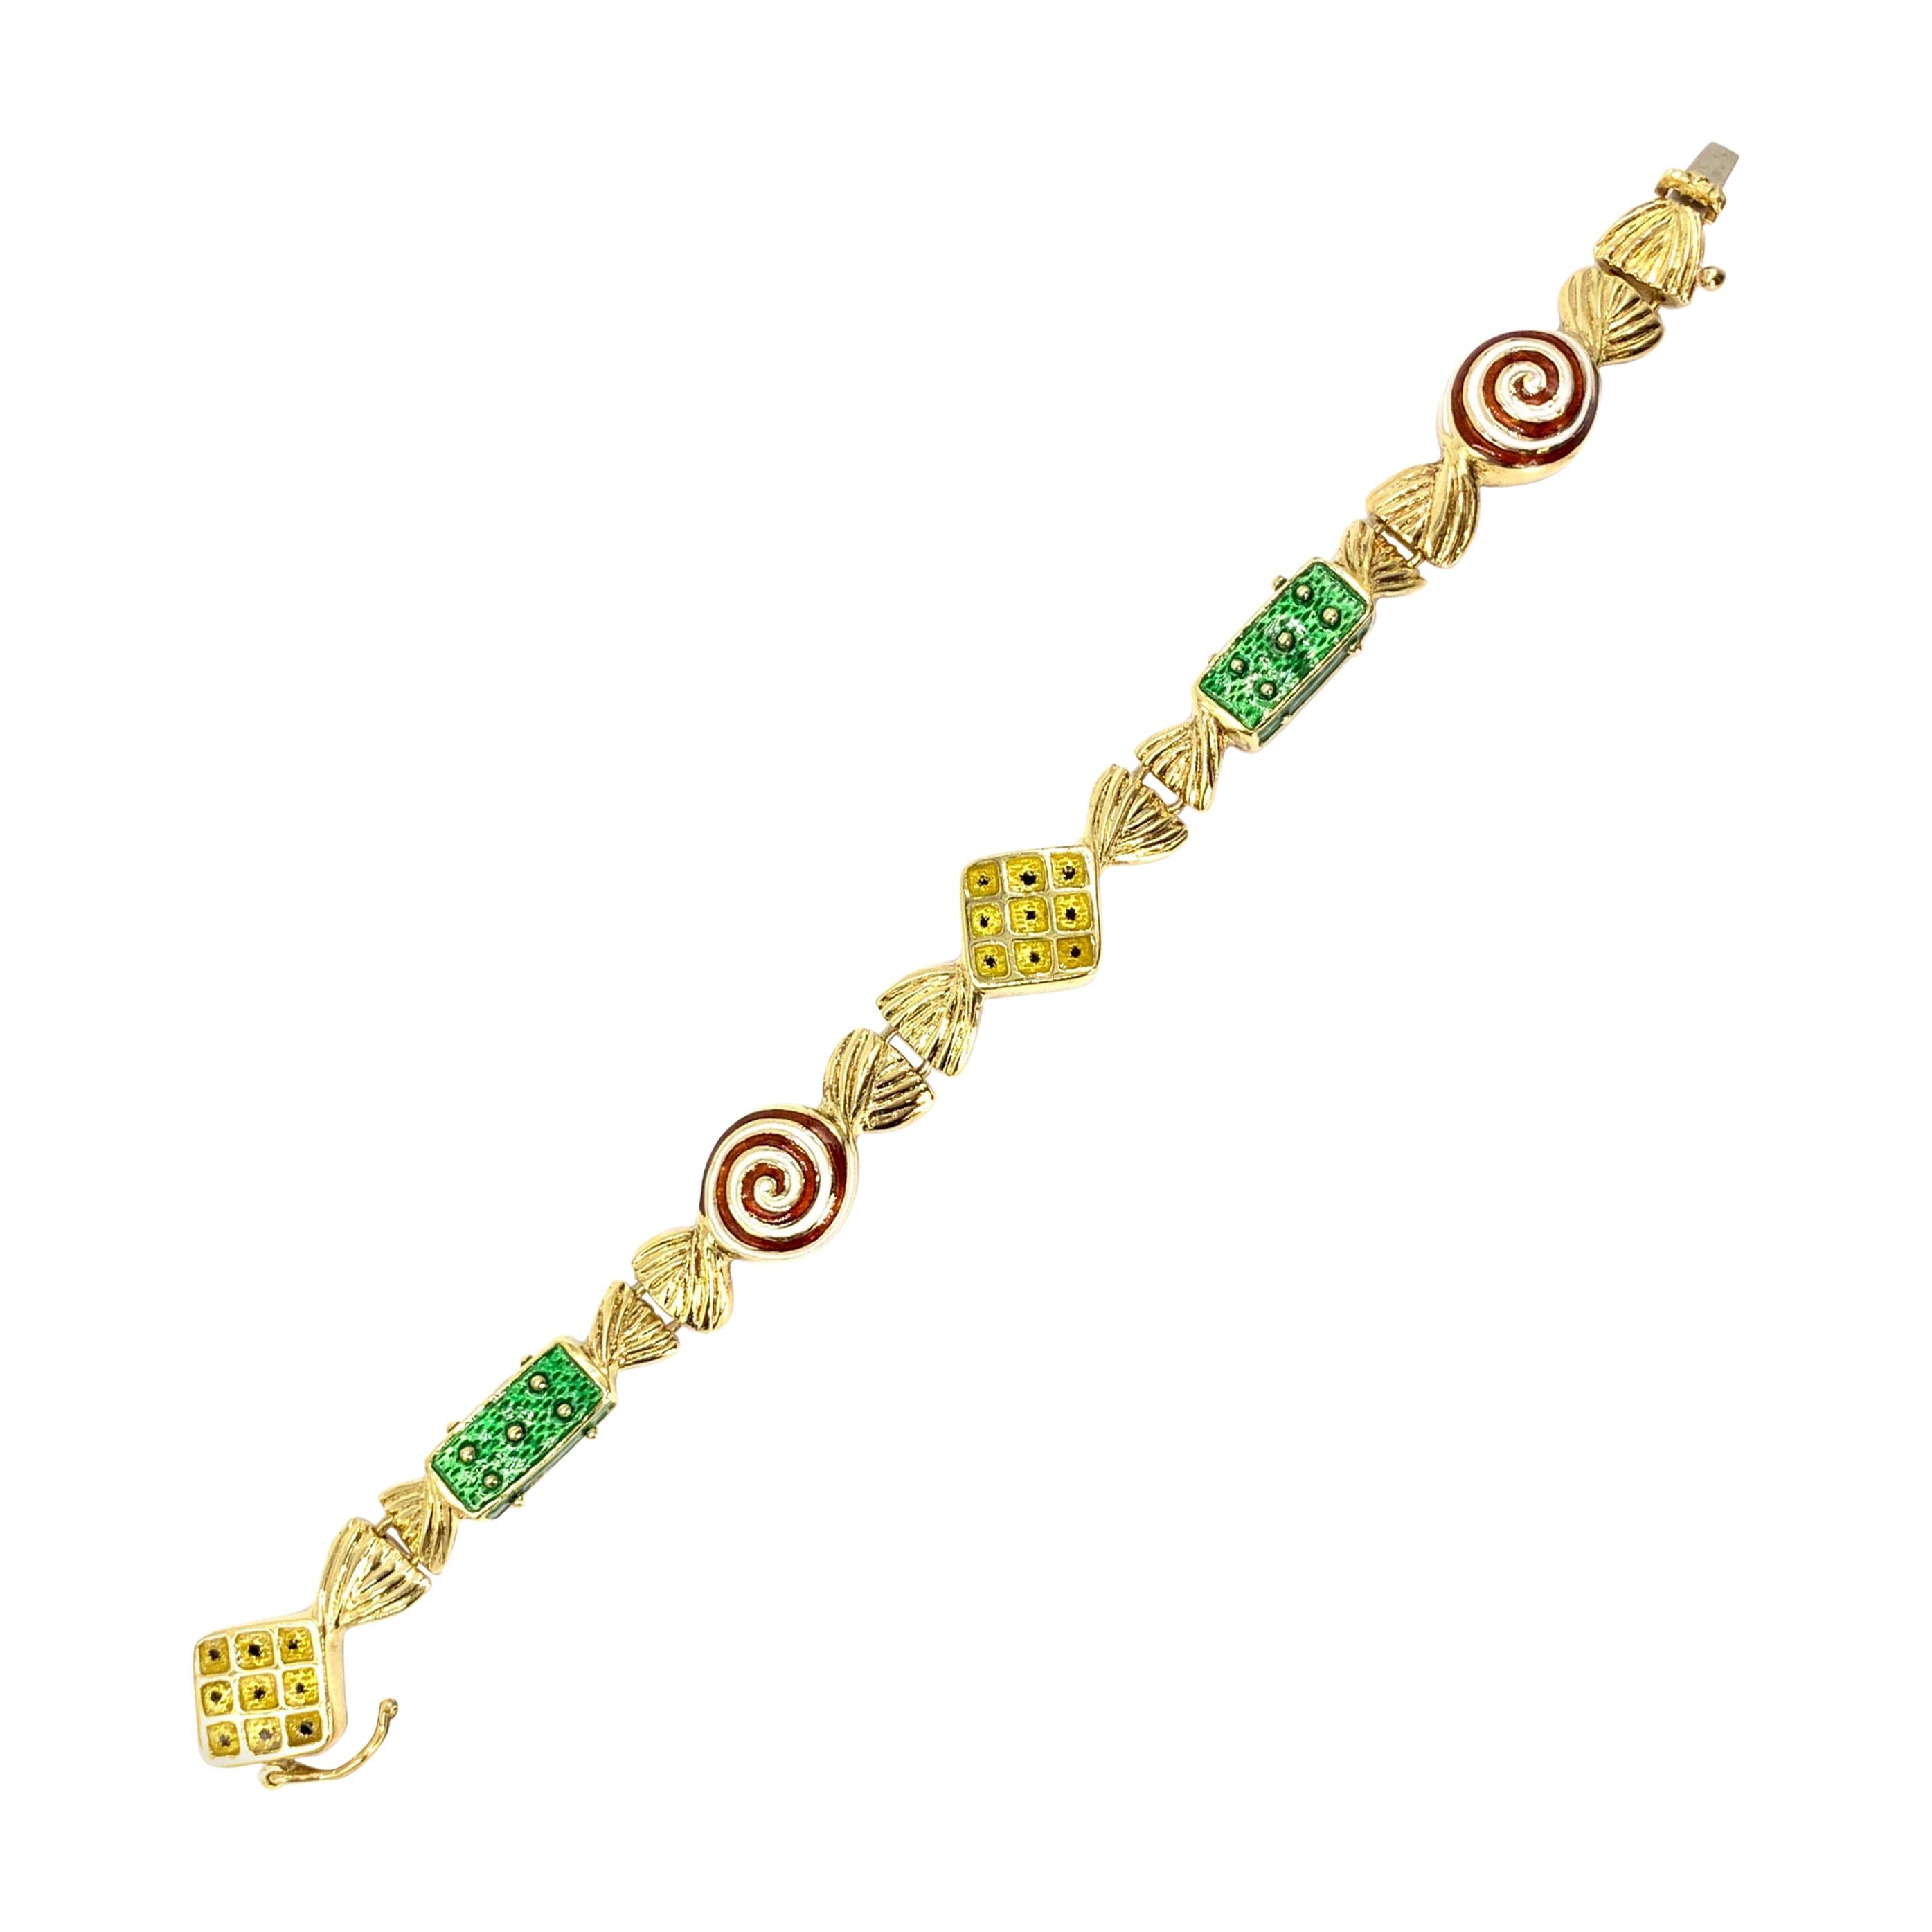 Hidalgo 18 Karat Gold and Enamel Candy Themed Bracelet